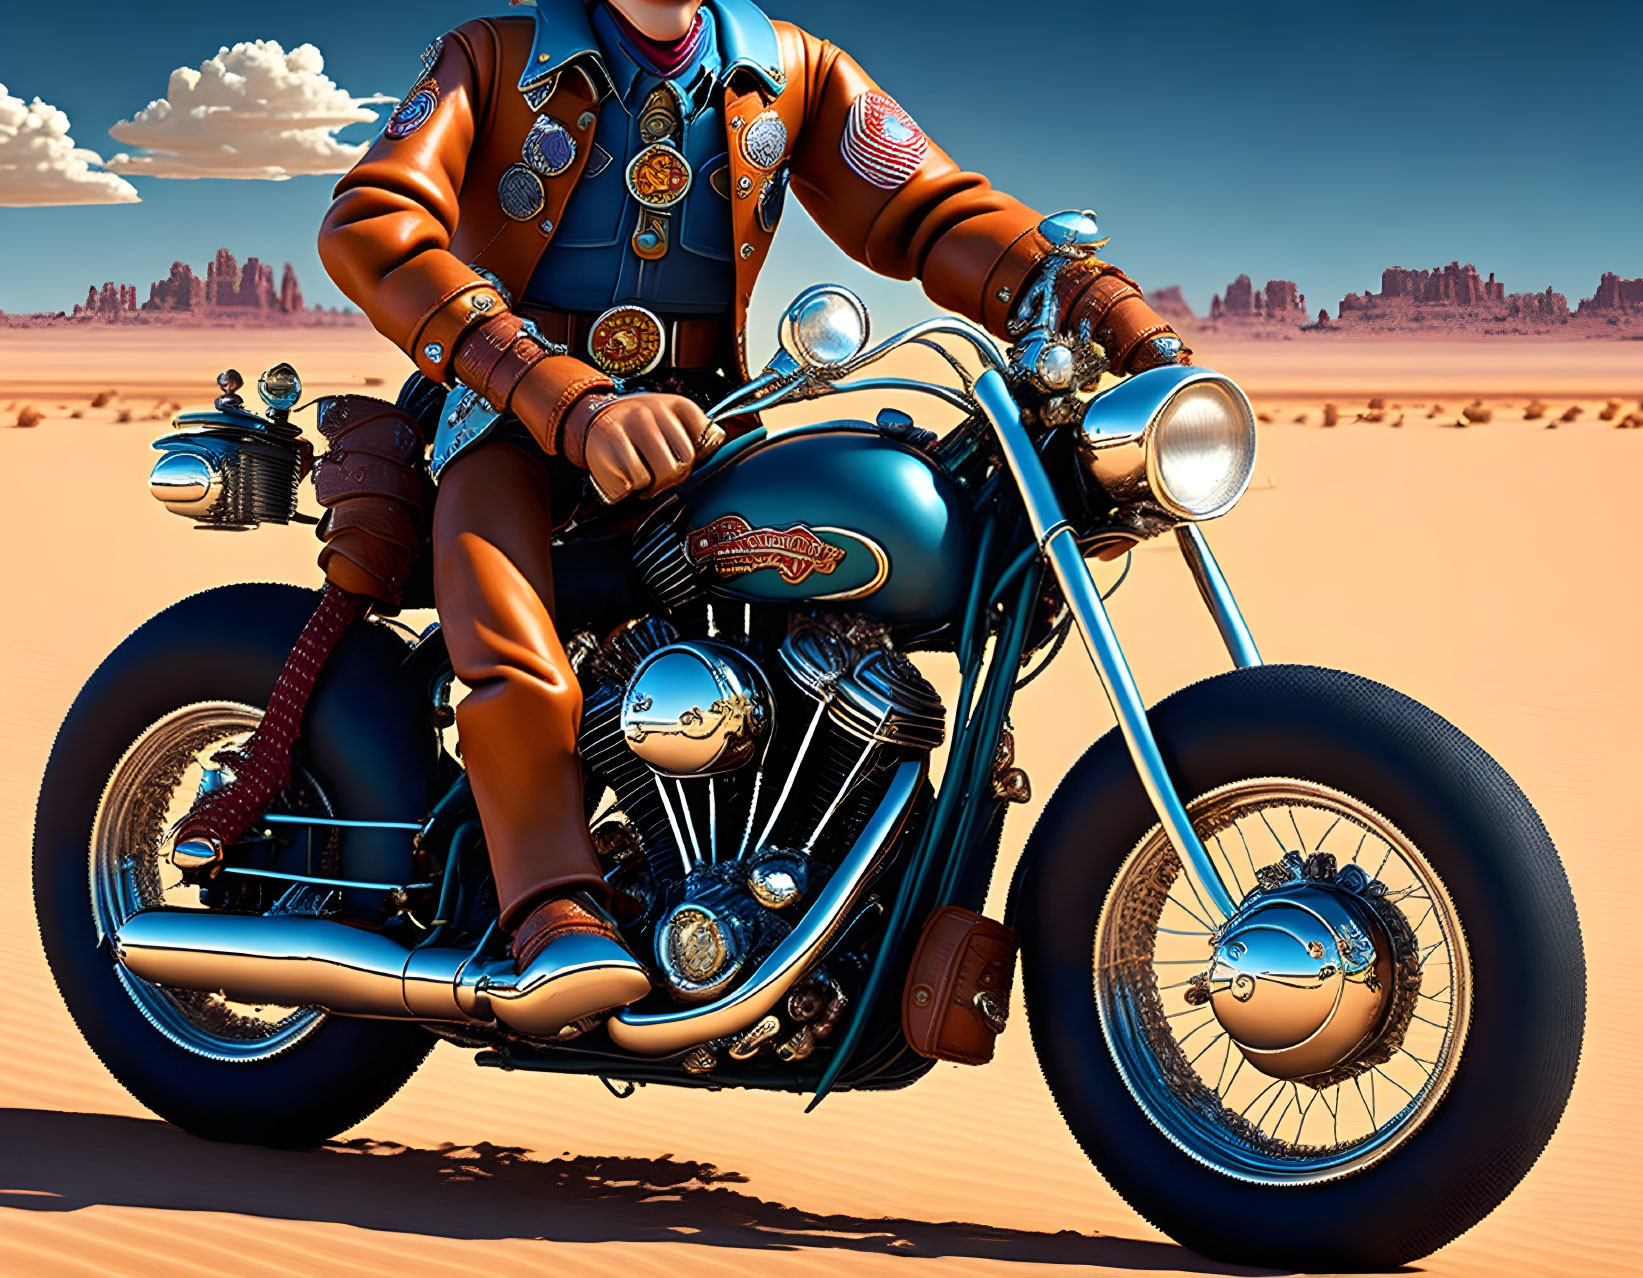 Stylized illustration: Biker in leather jacket on blue motorcycle in desert